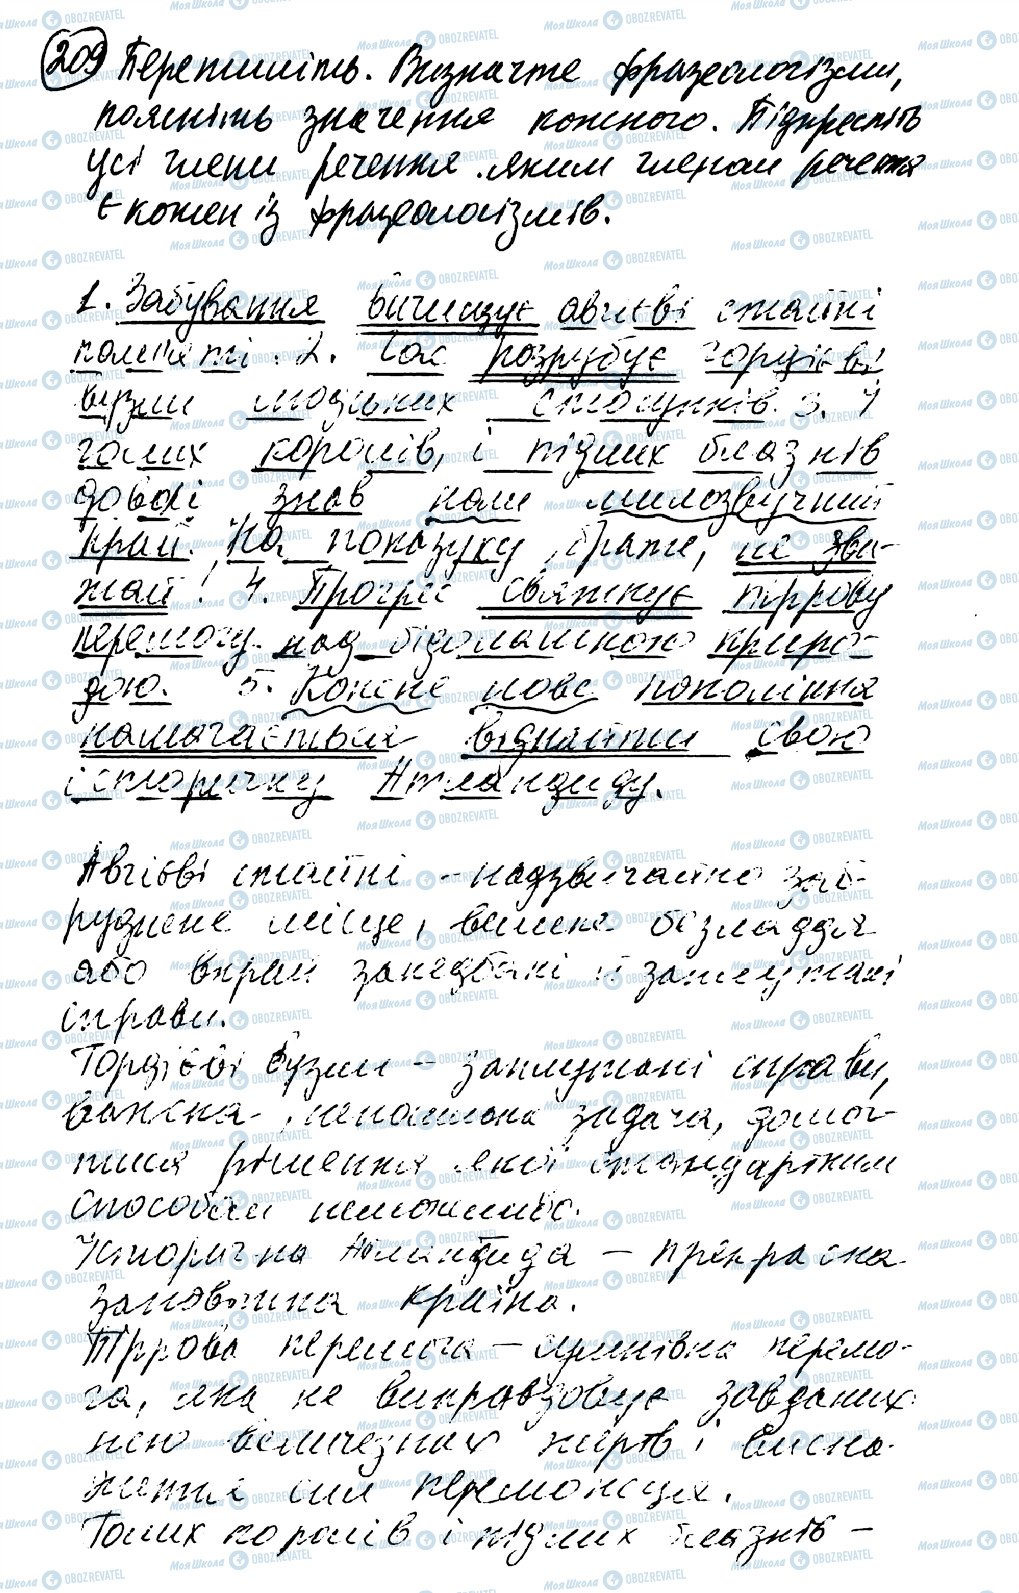 ГДЗ Укр мова 8 класс страница 209